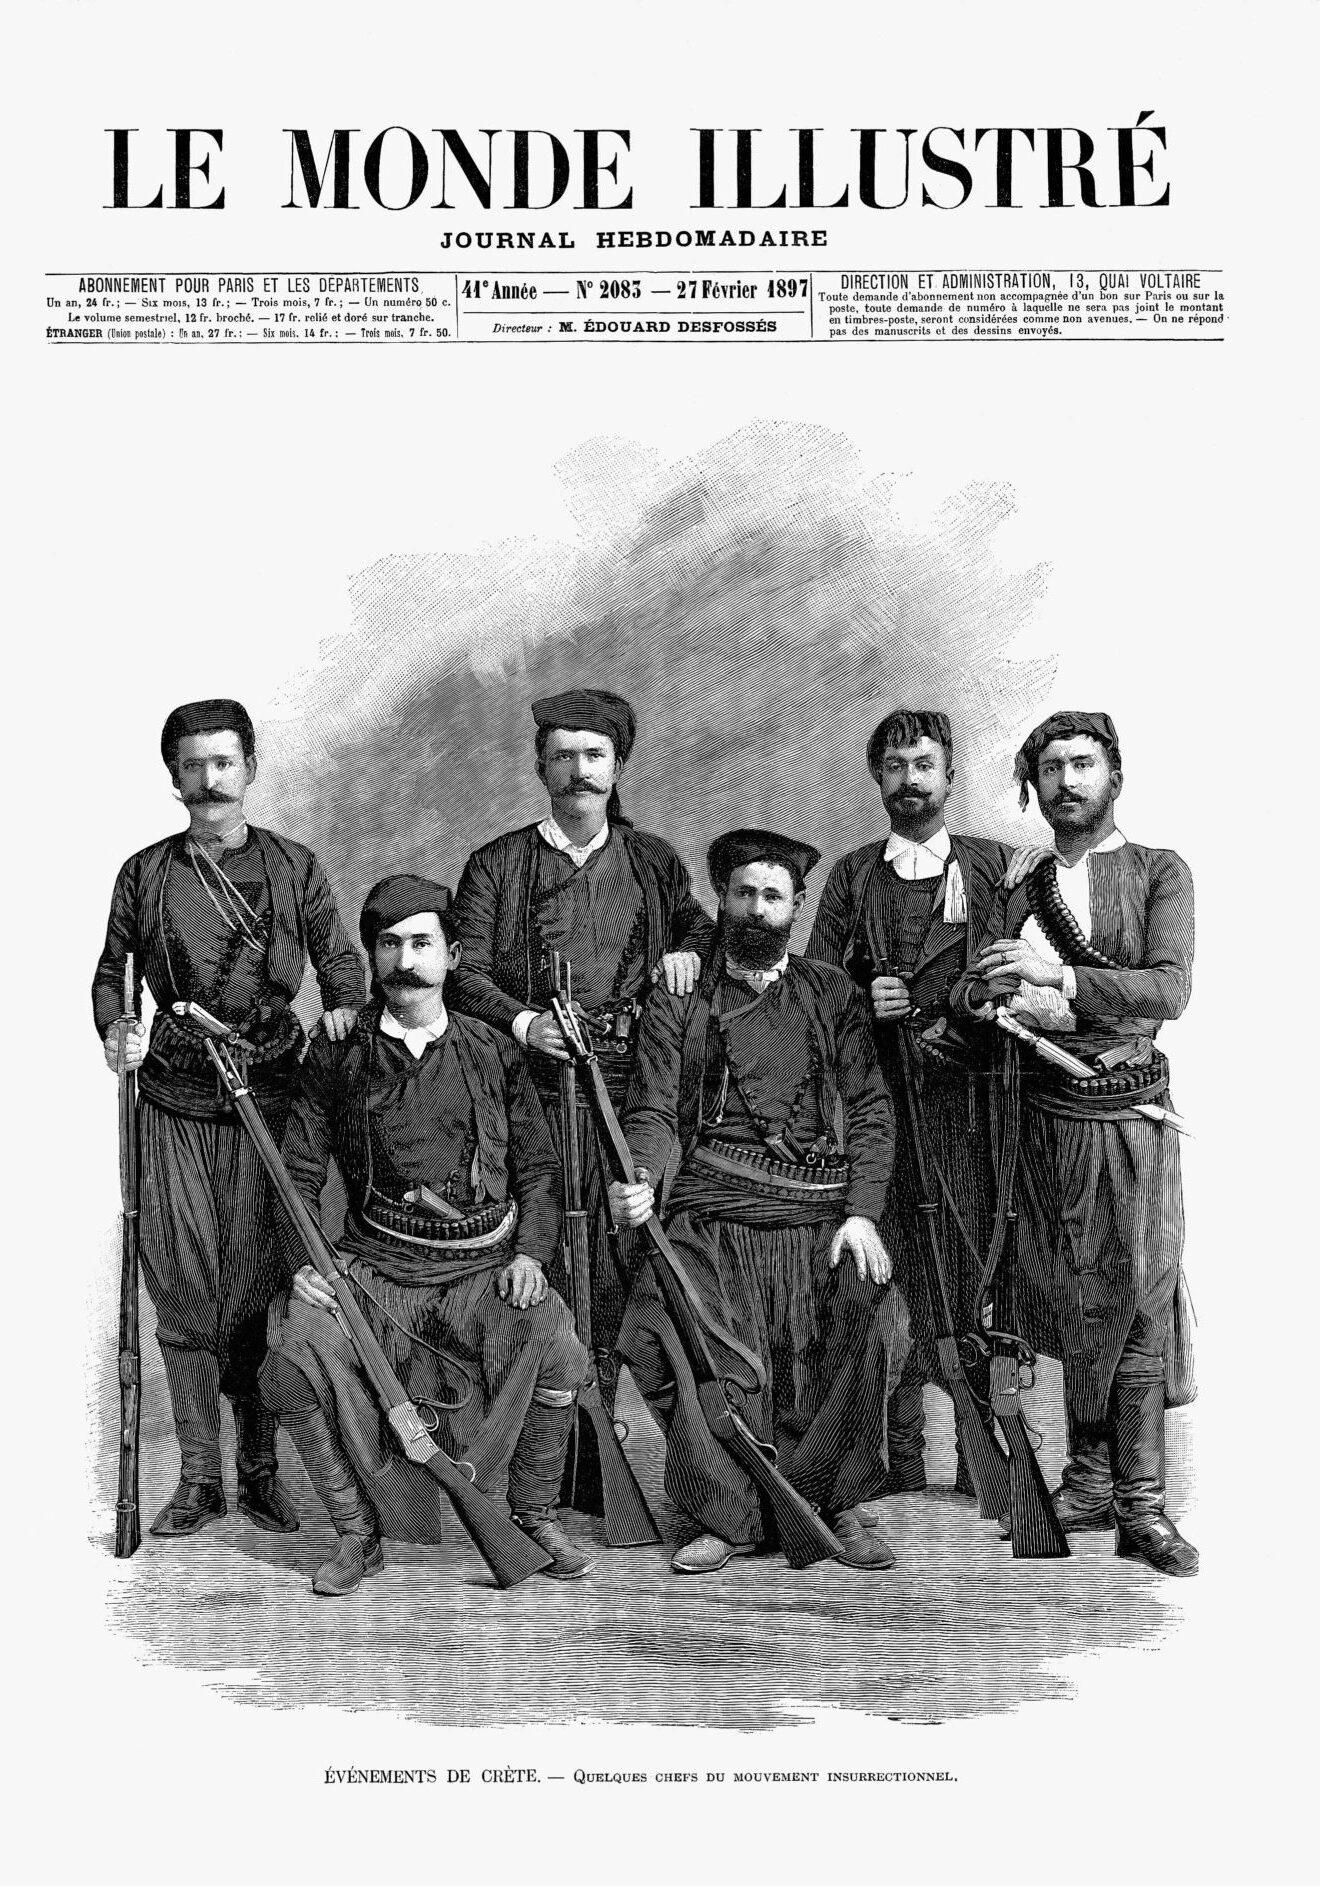 https://www.venizelos-foundation.gr/en/photographic-exhibition-akrotiri-1897-periodical/